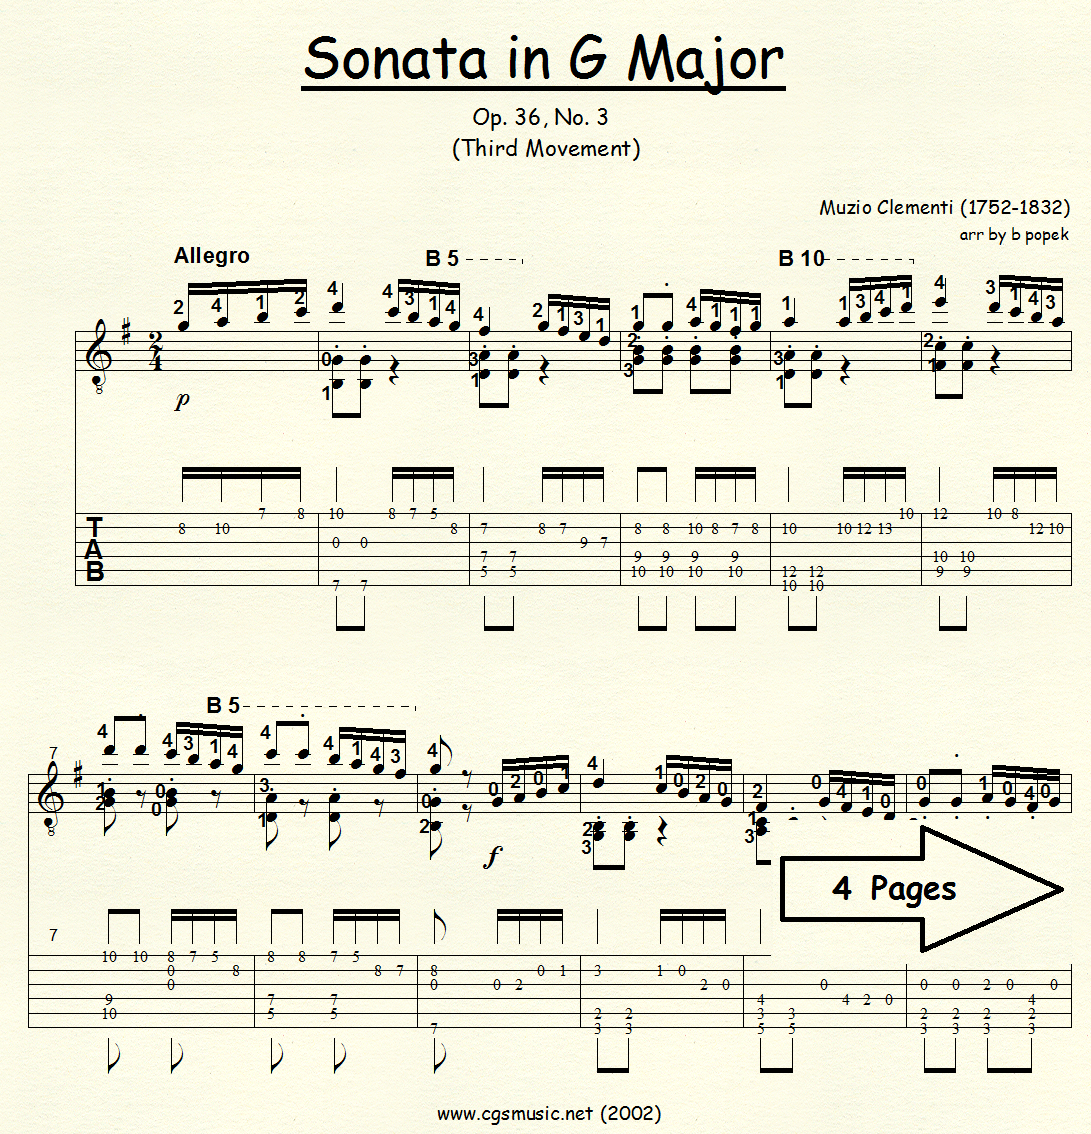 Sonata in G Major (Clementi) for Classical Guitar in Tablature